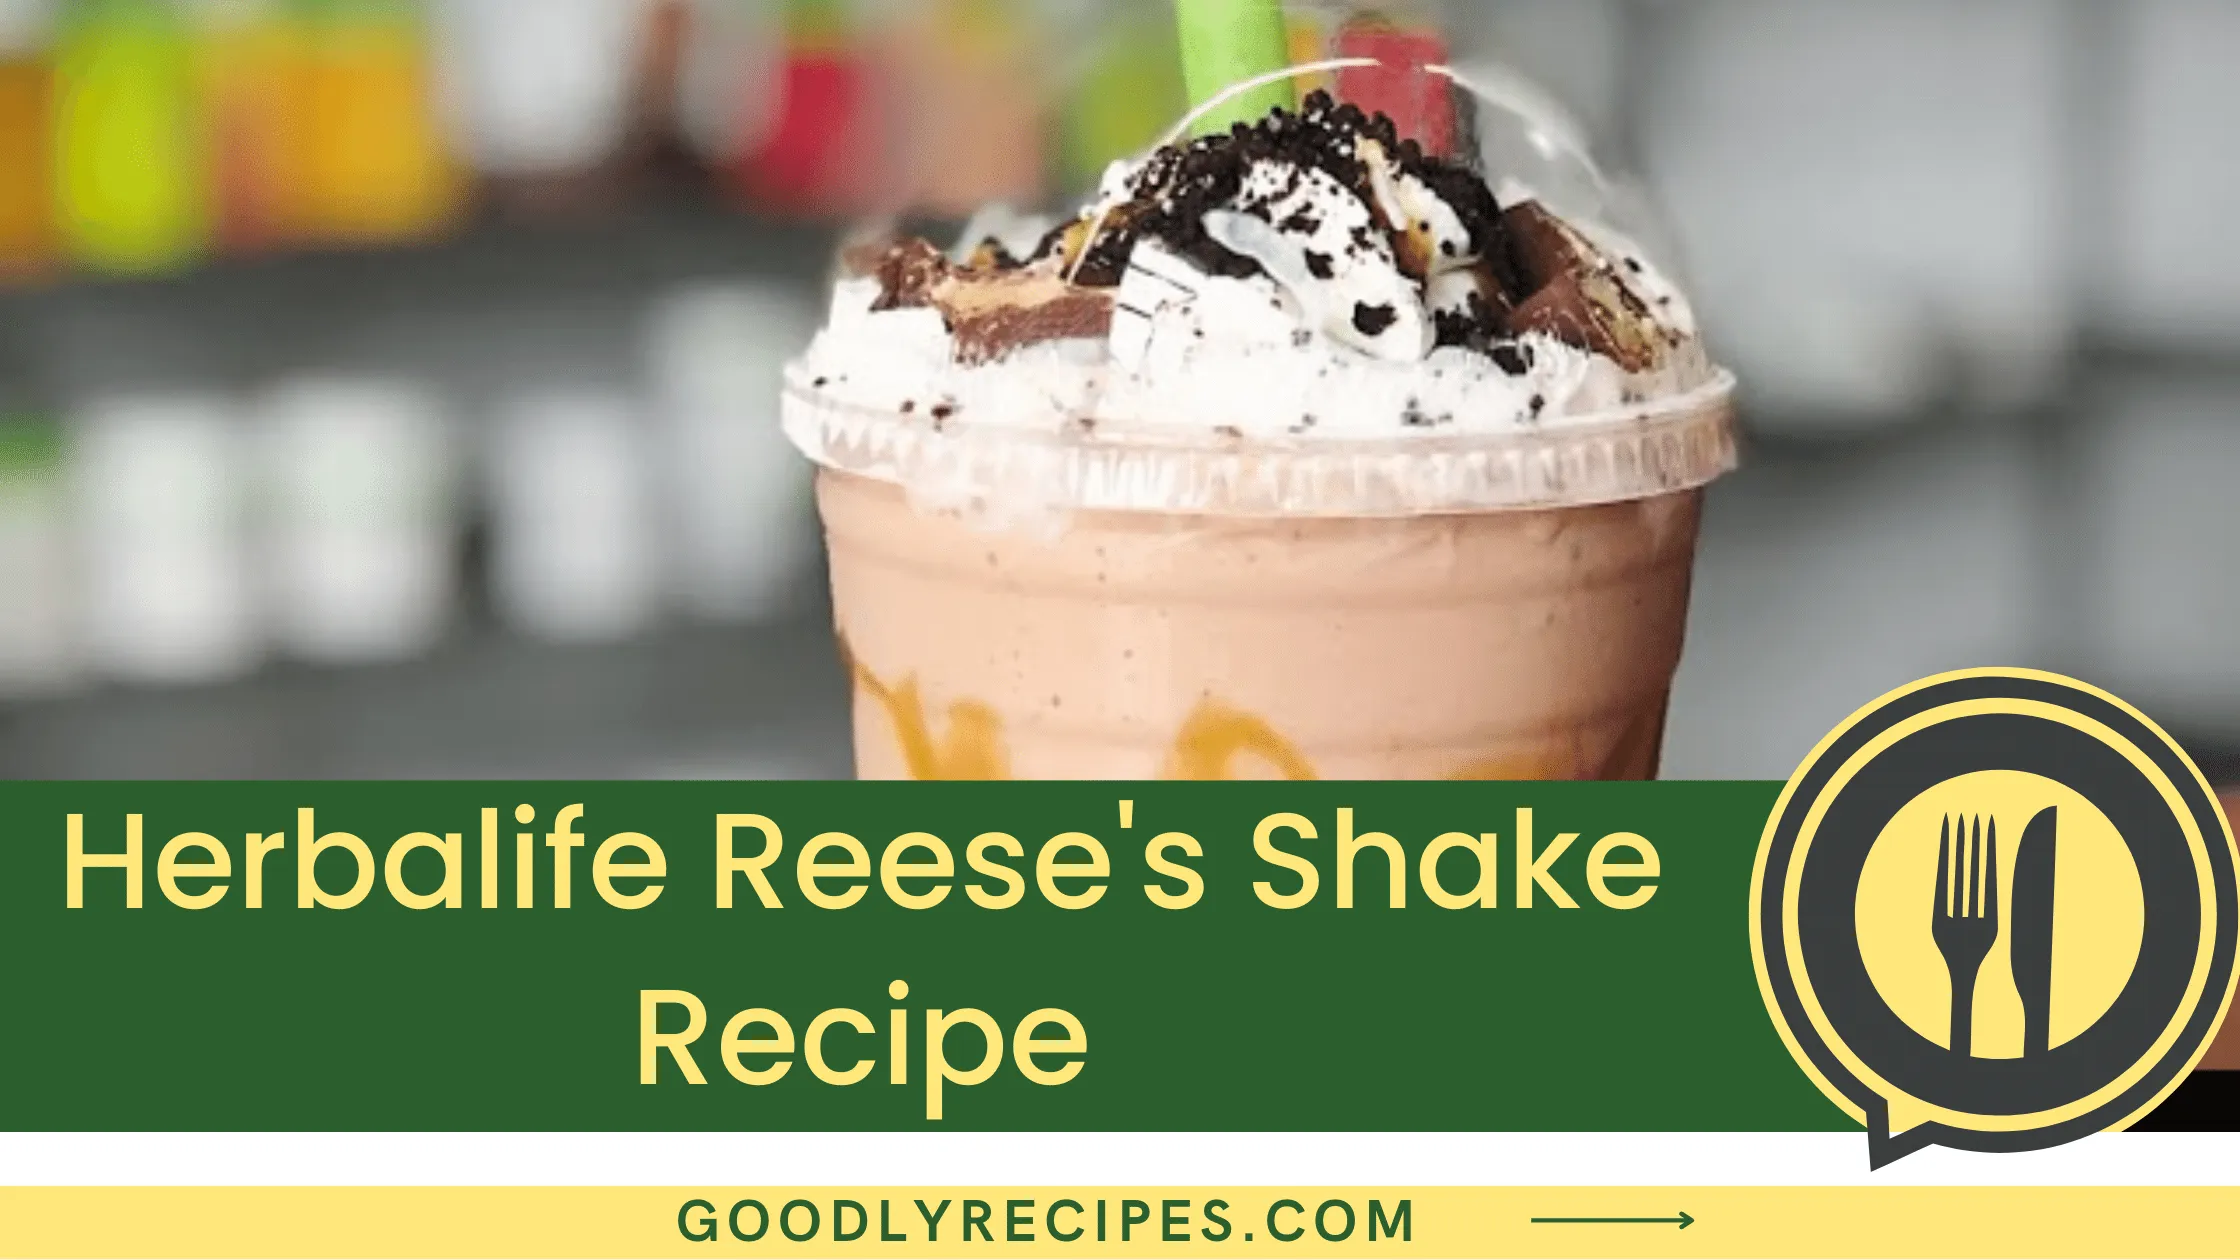 What is Herbalife Reese’s Shake?